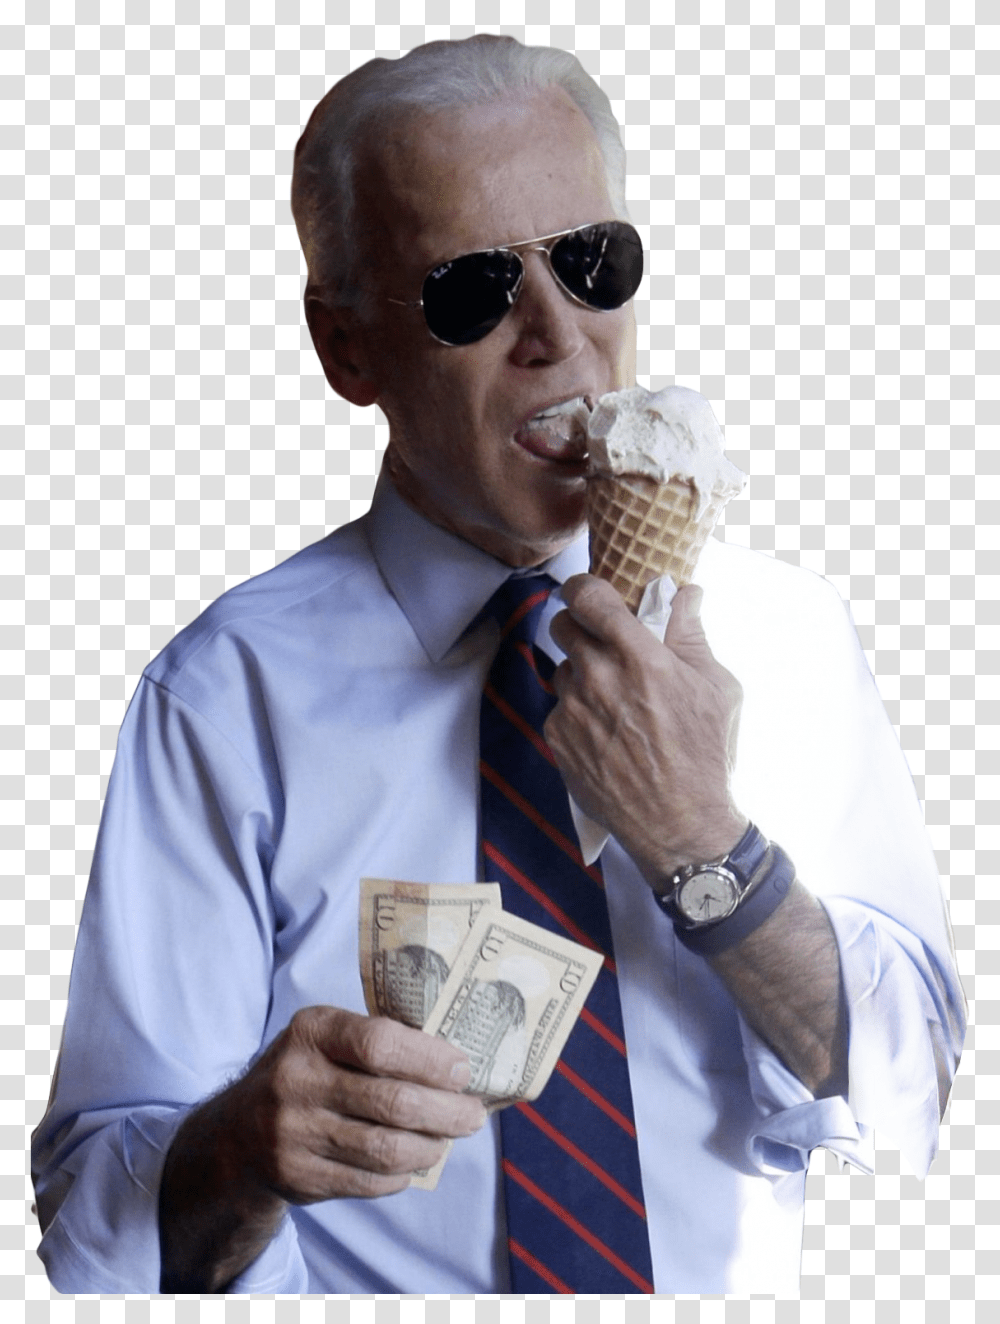 Joe Biden Eating Ice Cream Download Joe Biden Ray Bans, Tie, Accessories, Accessory, Sunglasses Transparent Png